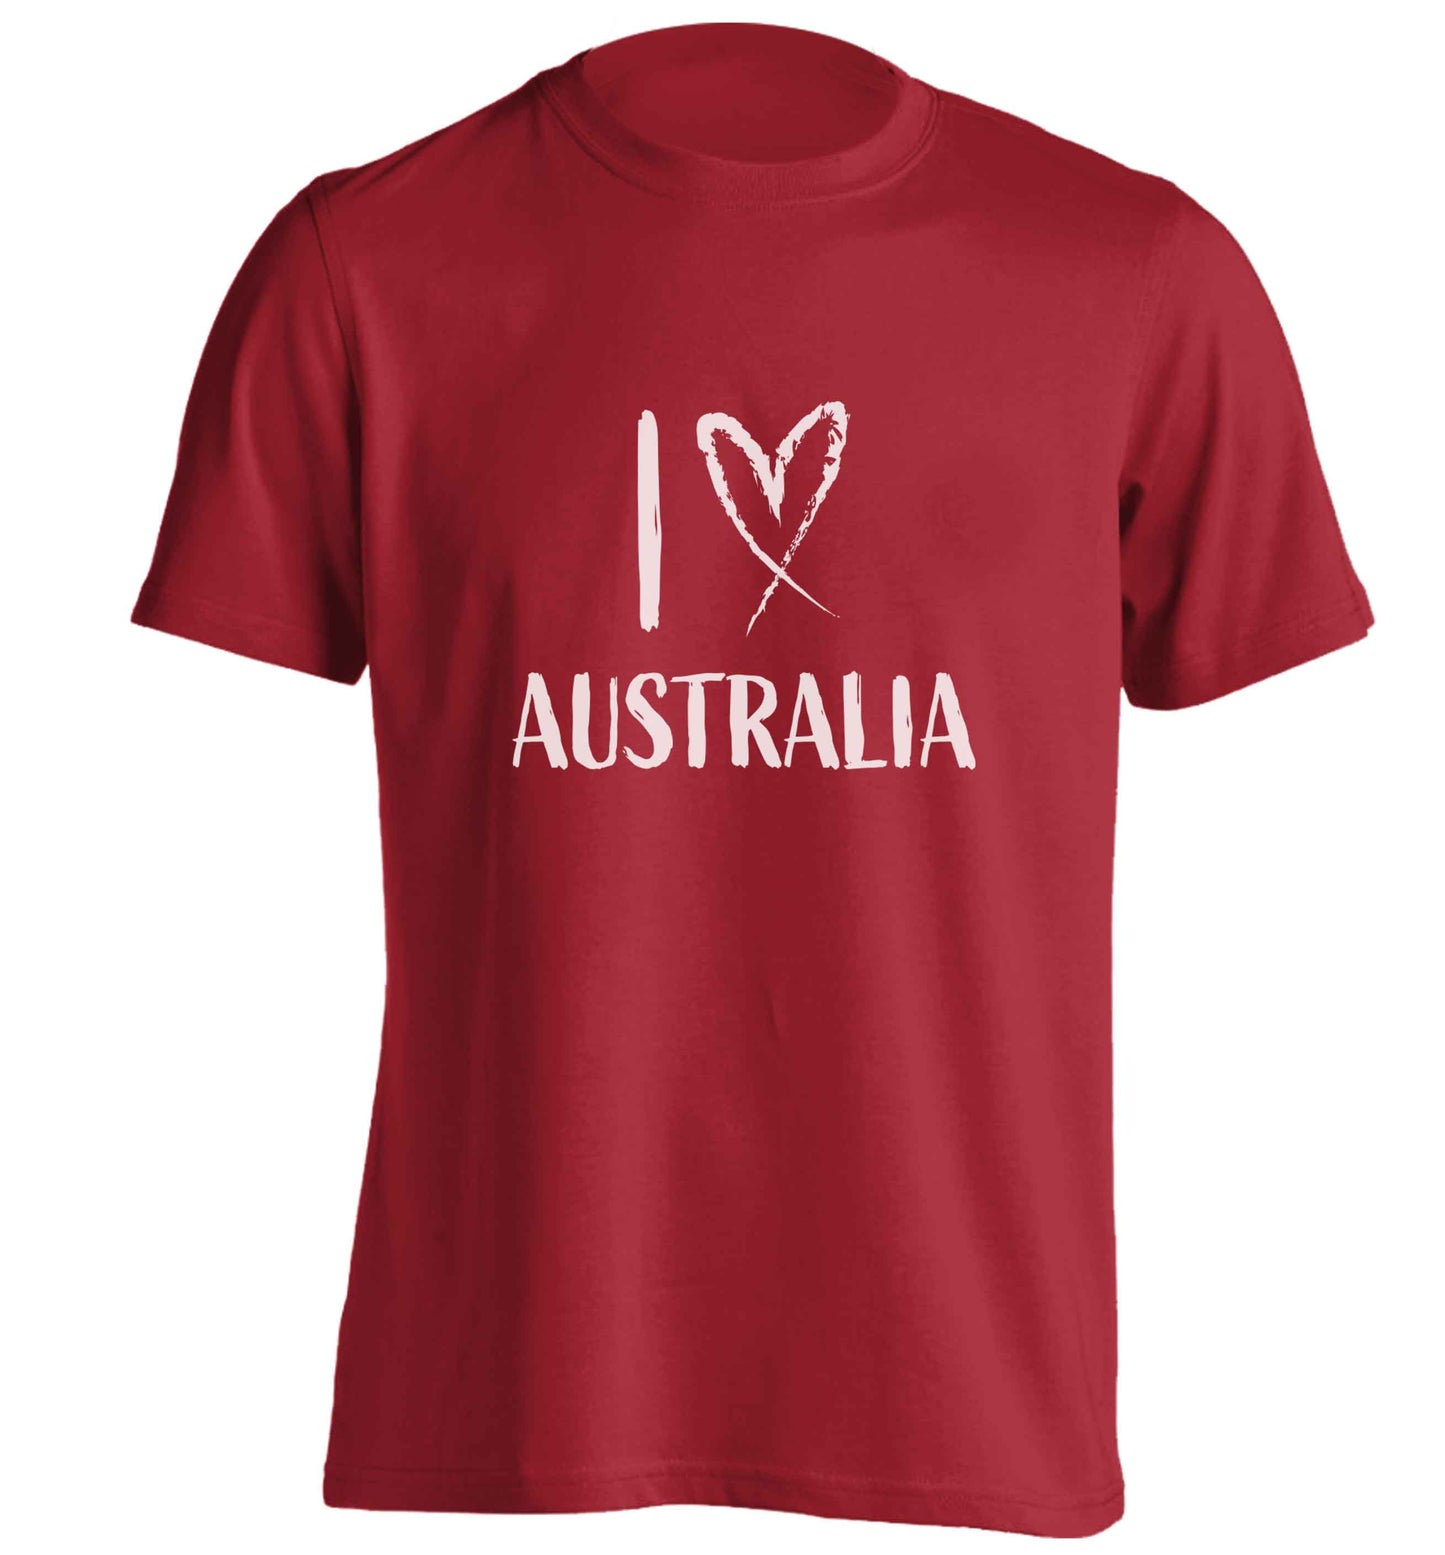 I Love Australia adults unisex red Tshirt 2XL